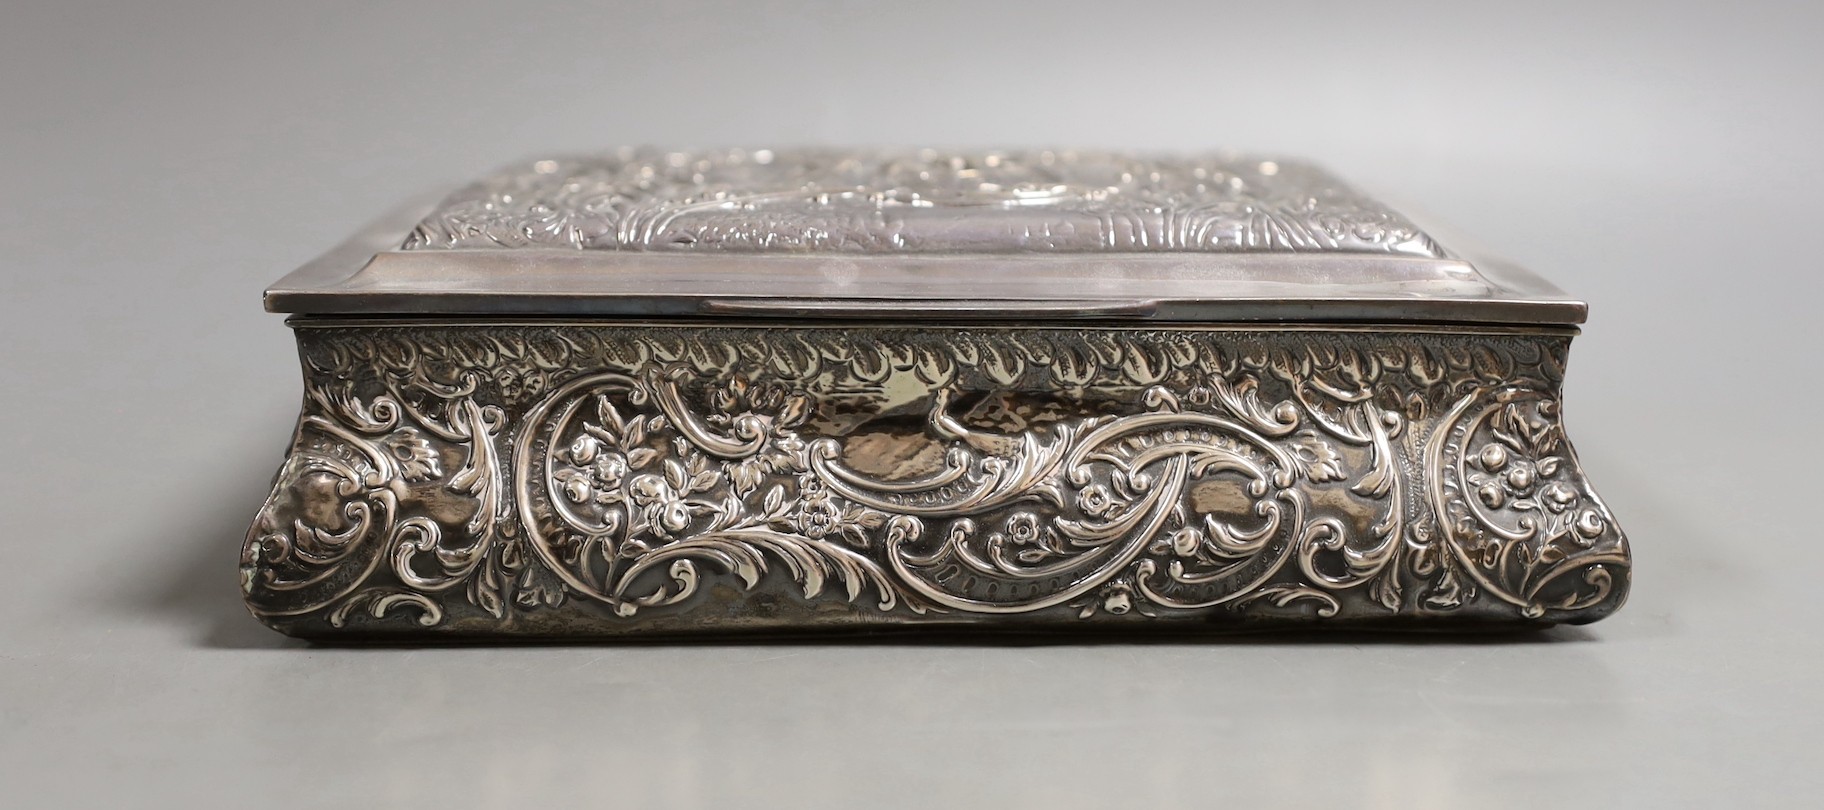 An Edwardian embossed silver mounted rectangular bombe shaped jewellery casket, Henry Matthews, Birmingham, 1905, 19.2cm.